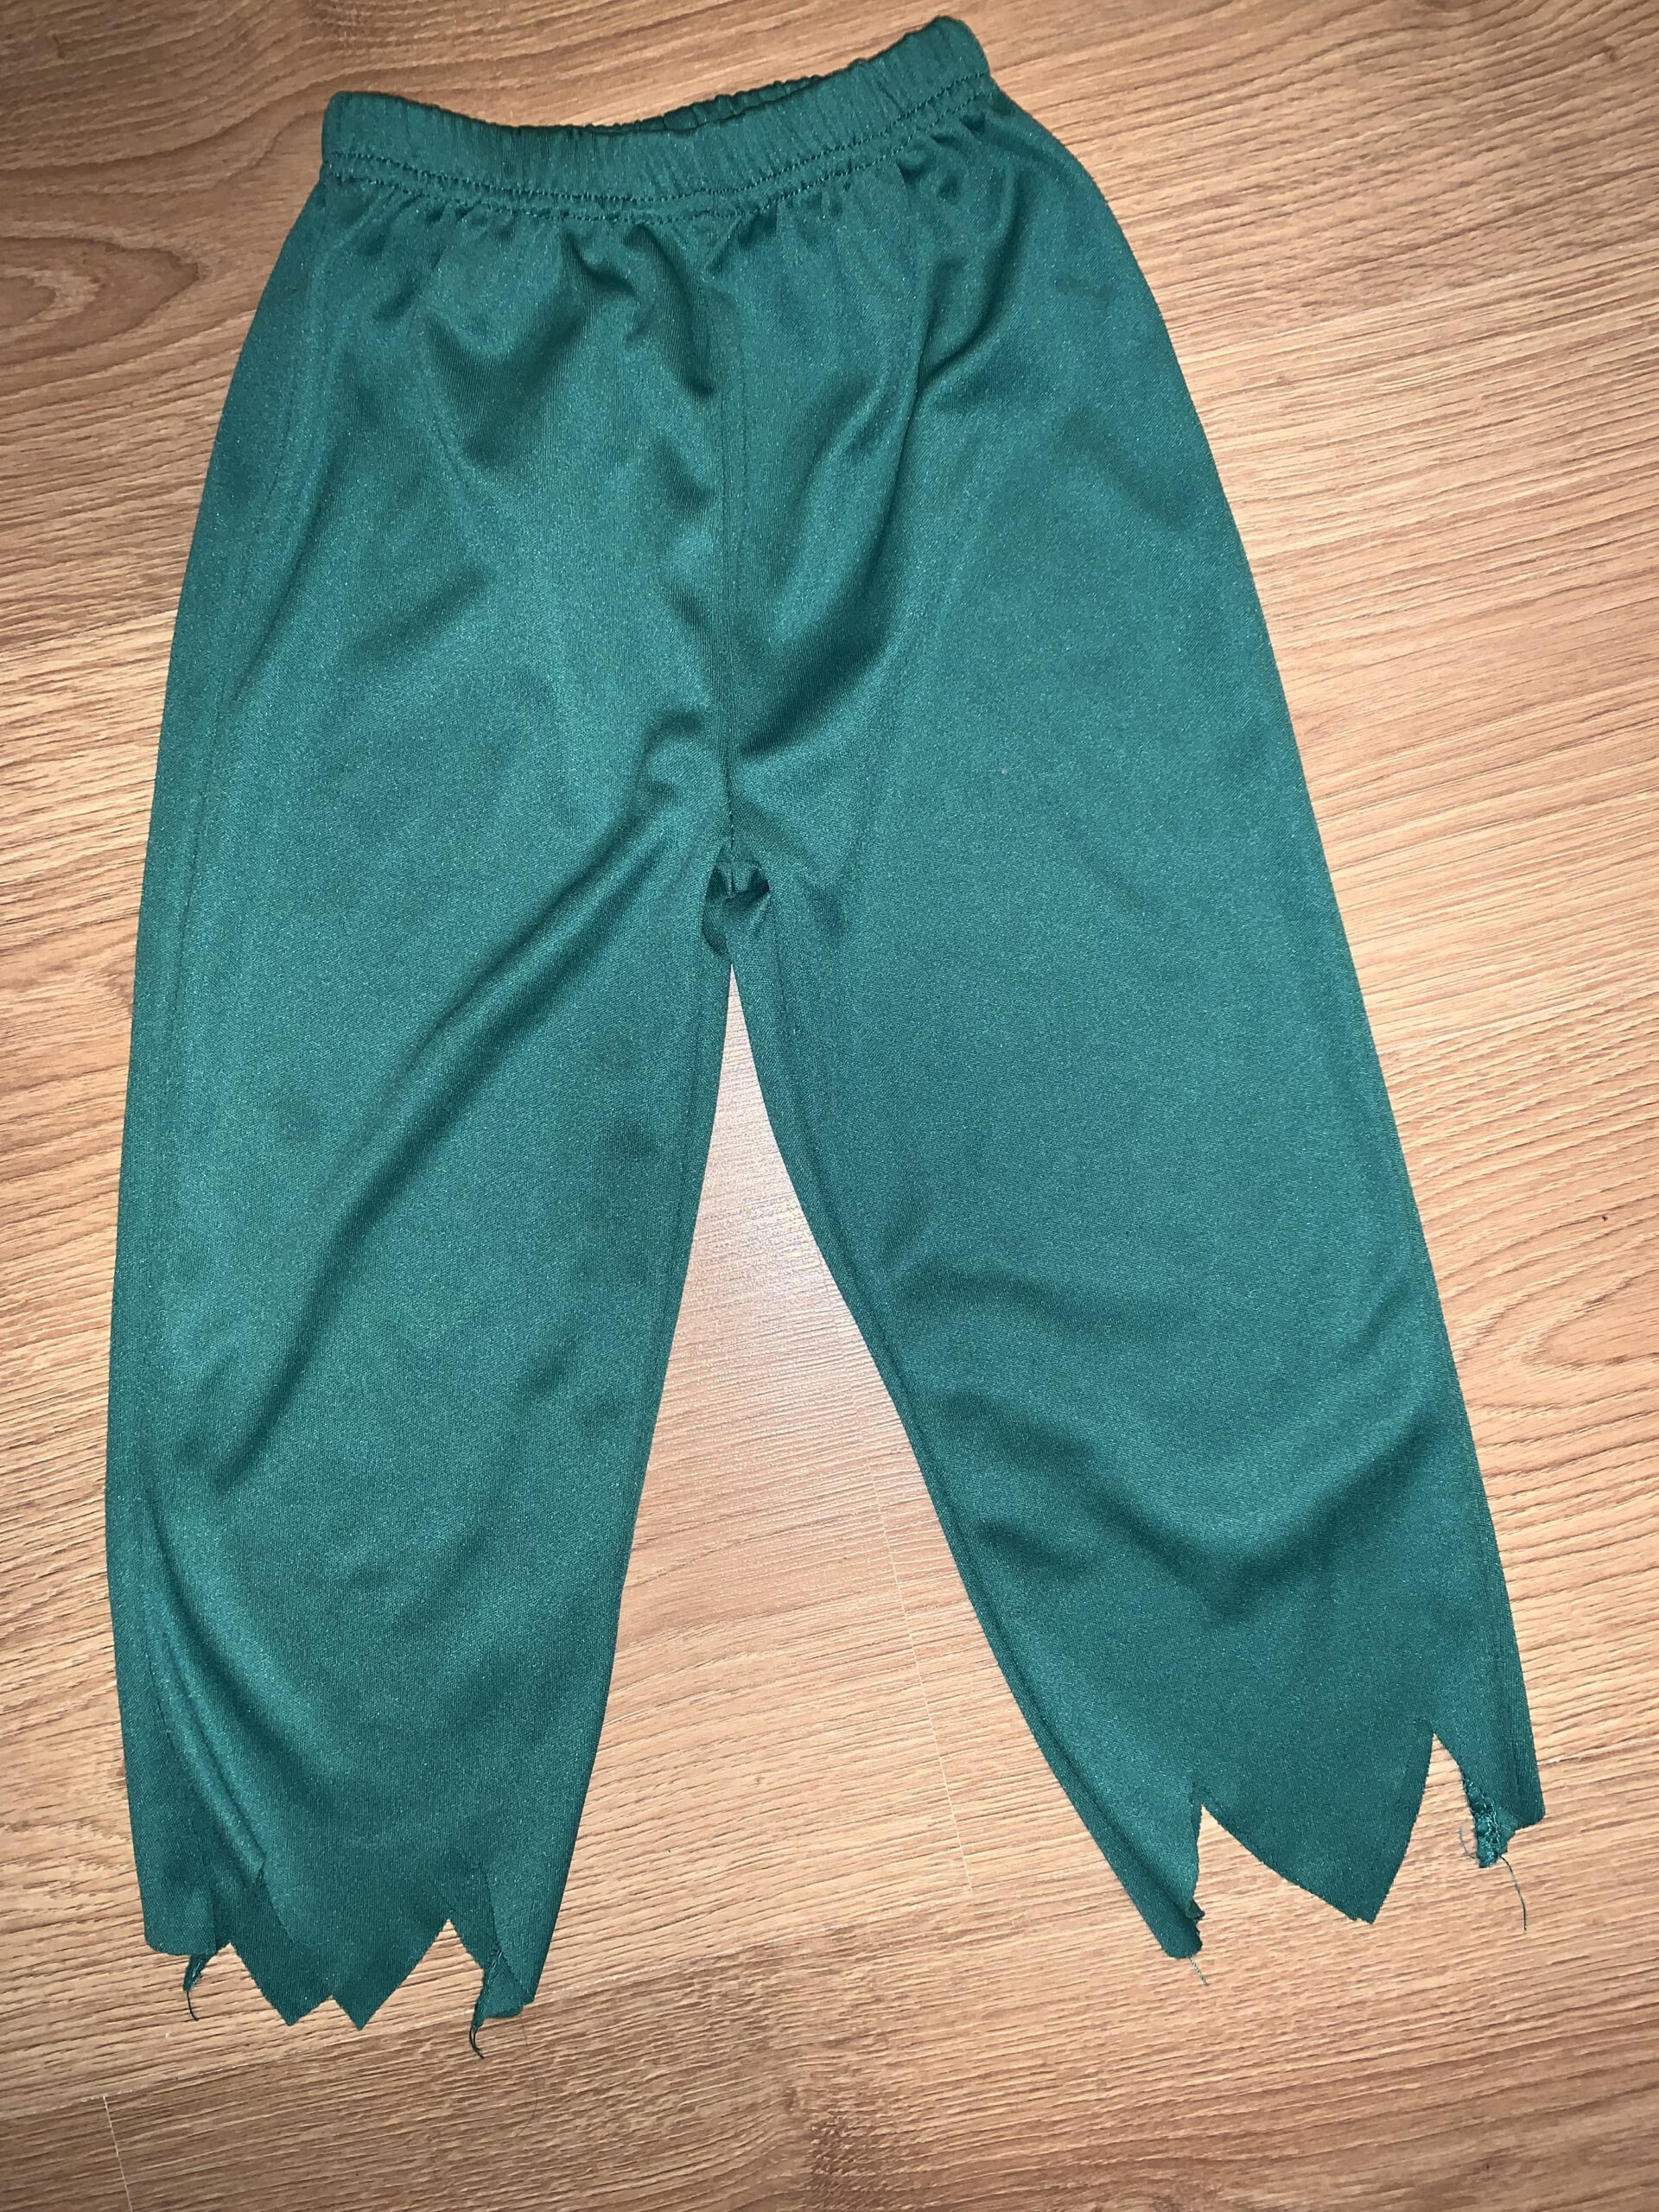 Kalhoty ke kostýmu velikost 98, cp 3951